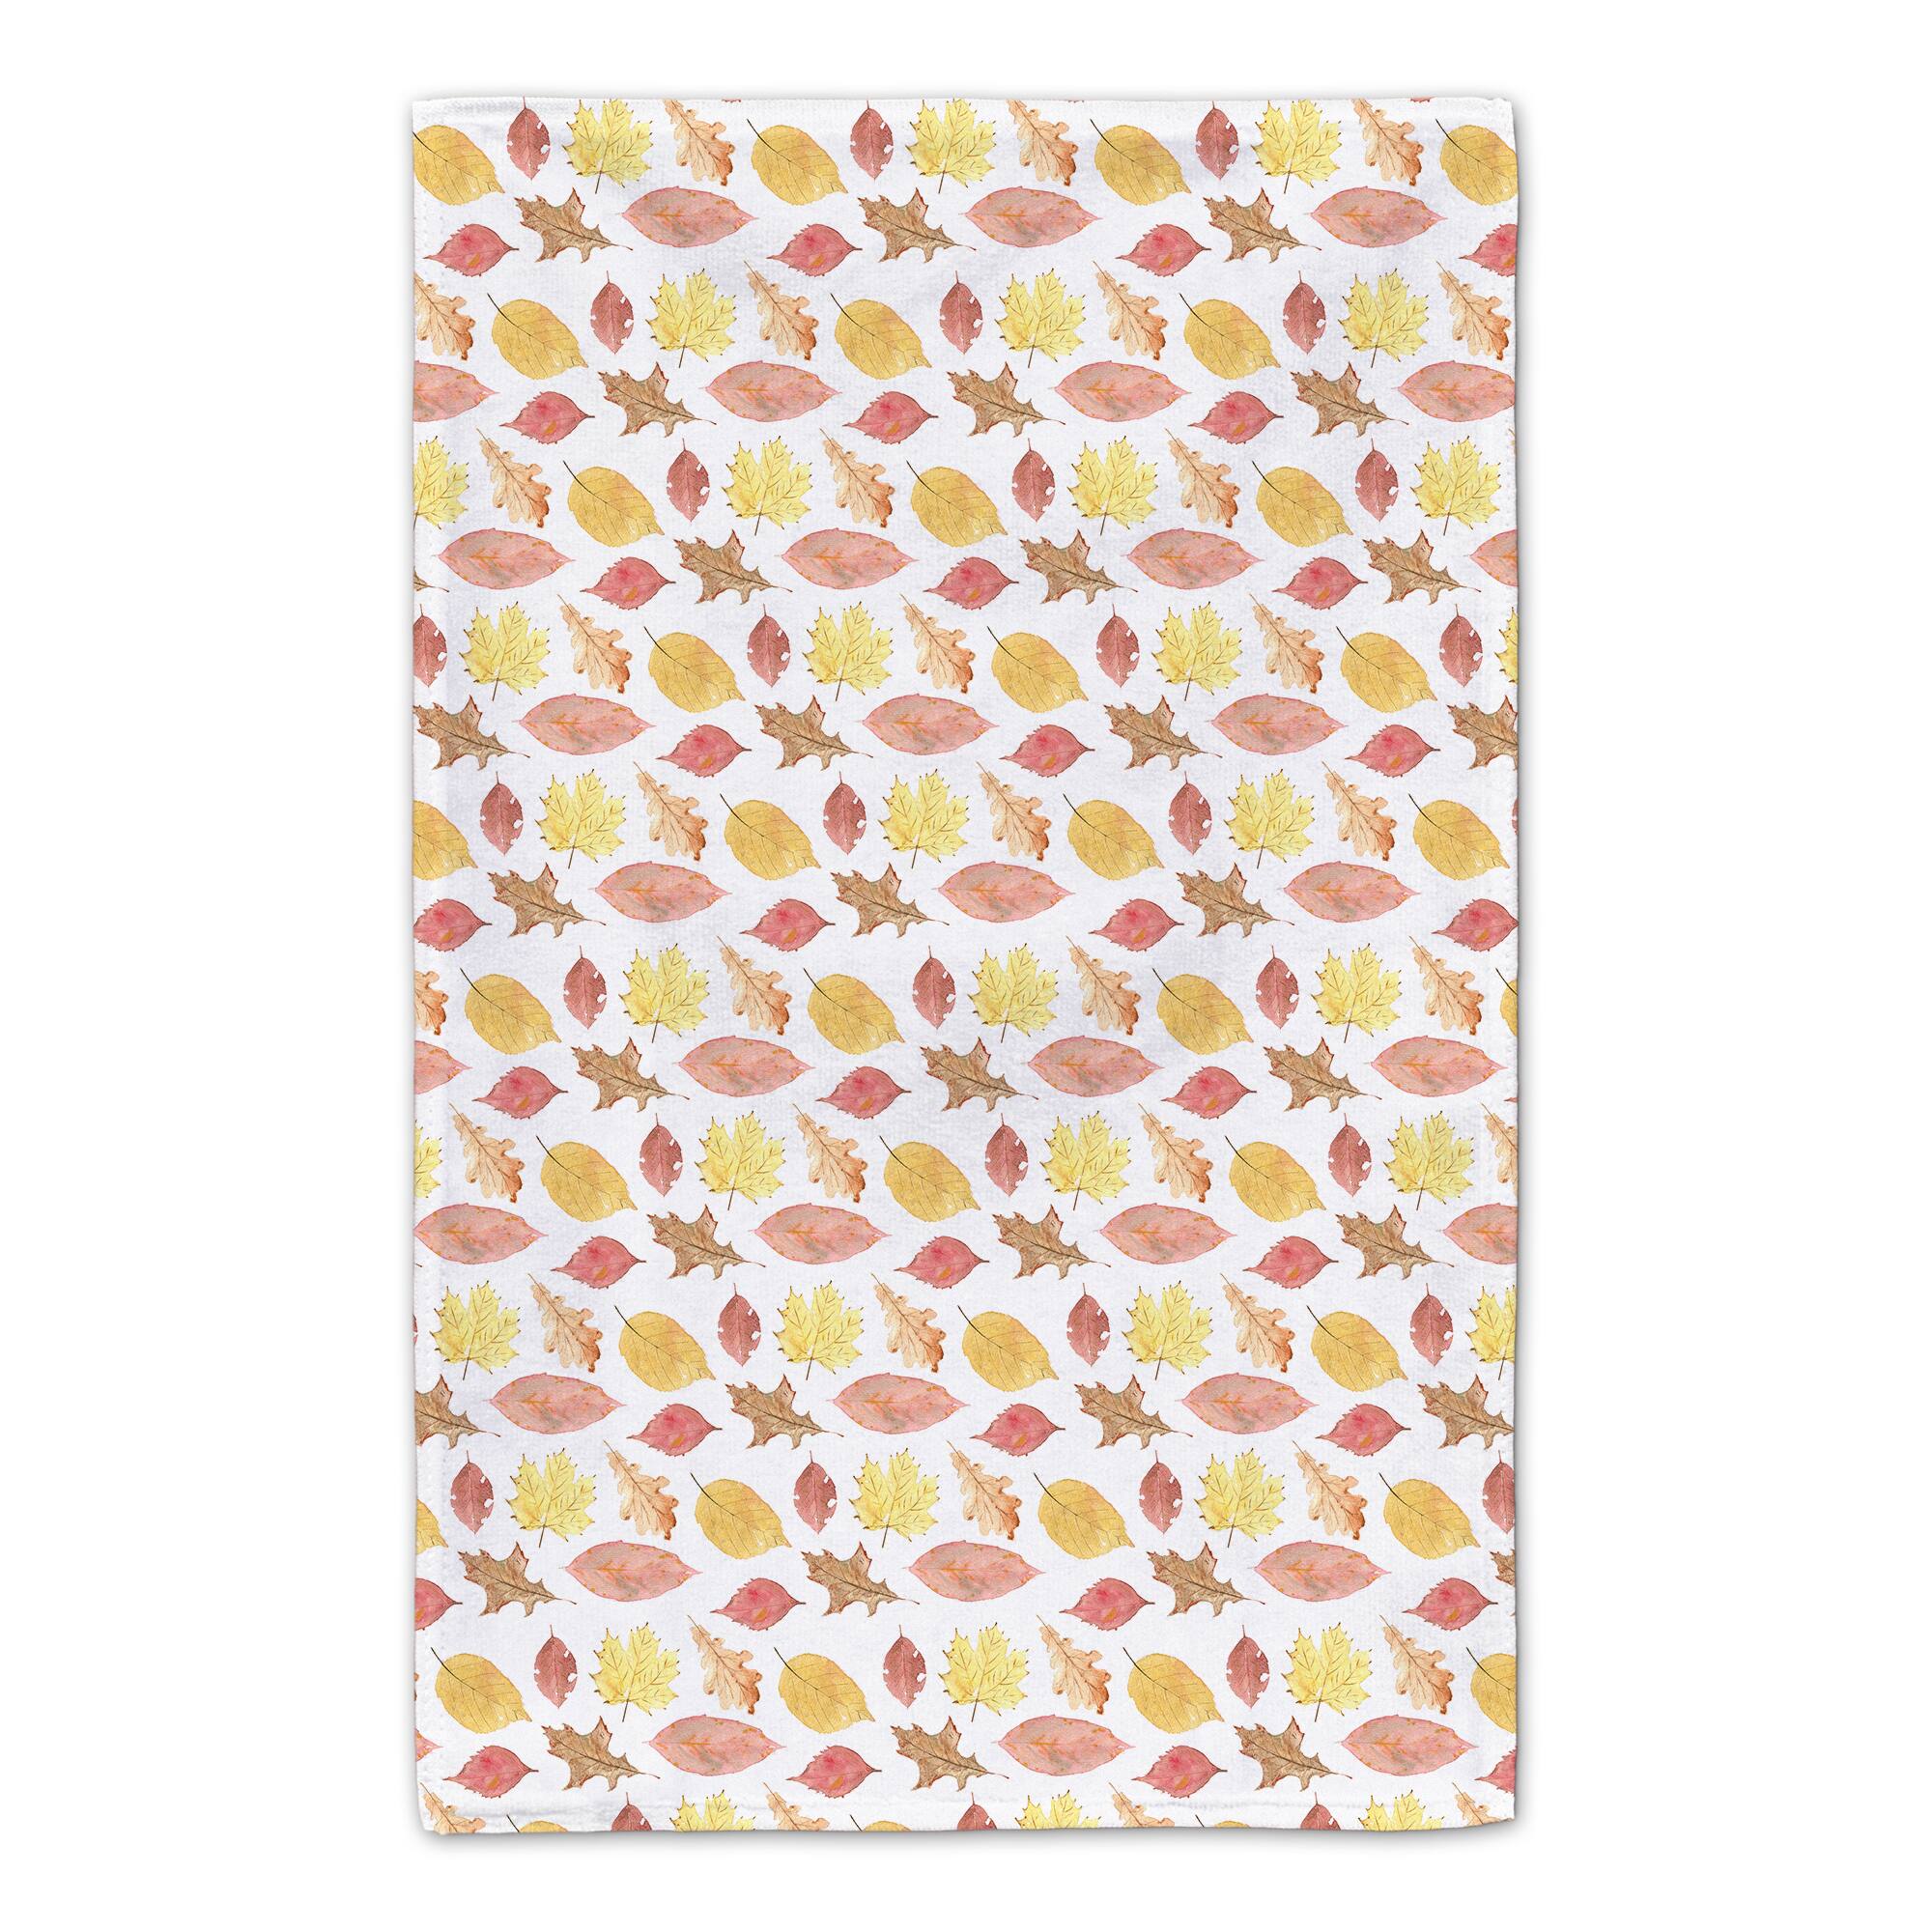 Happy Fall Y&#x27;all Hedgehog Tea Towel Set